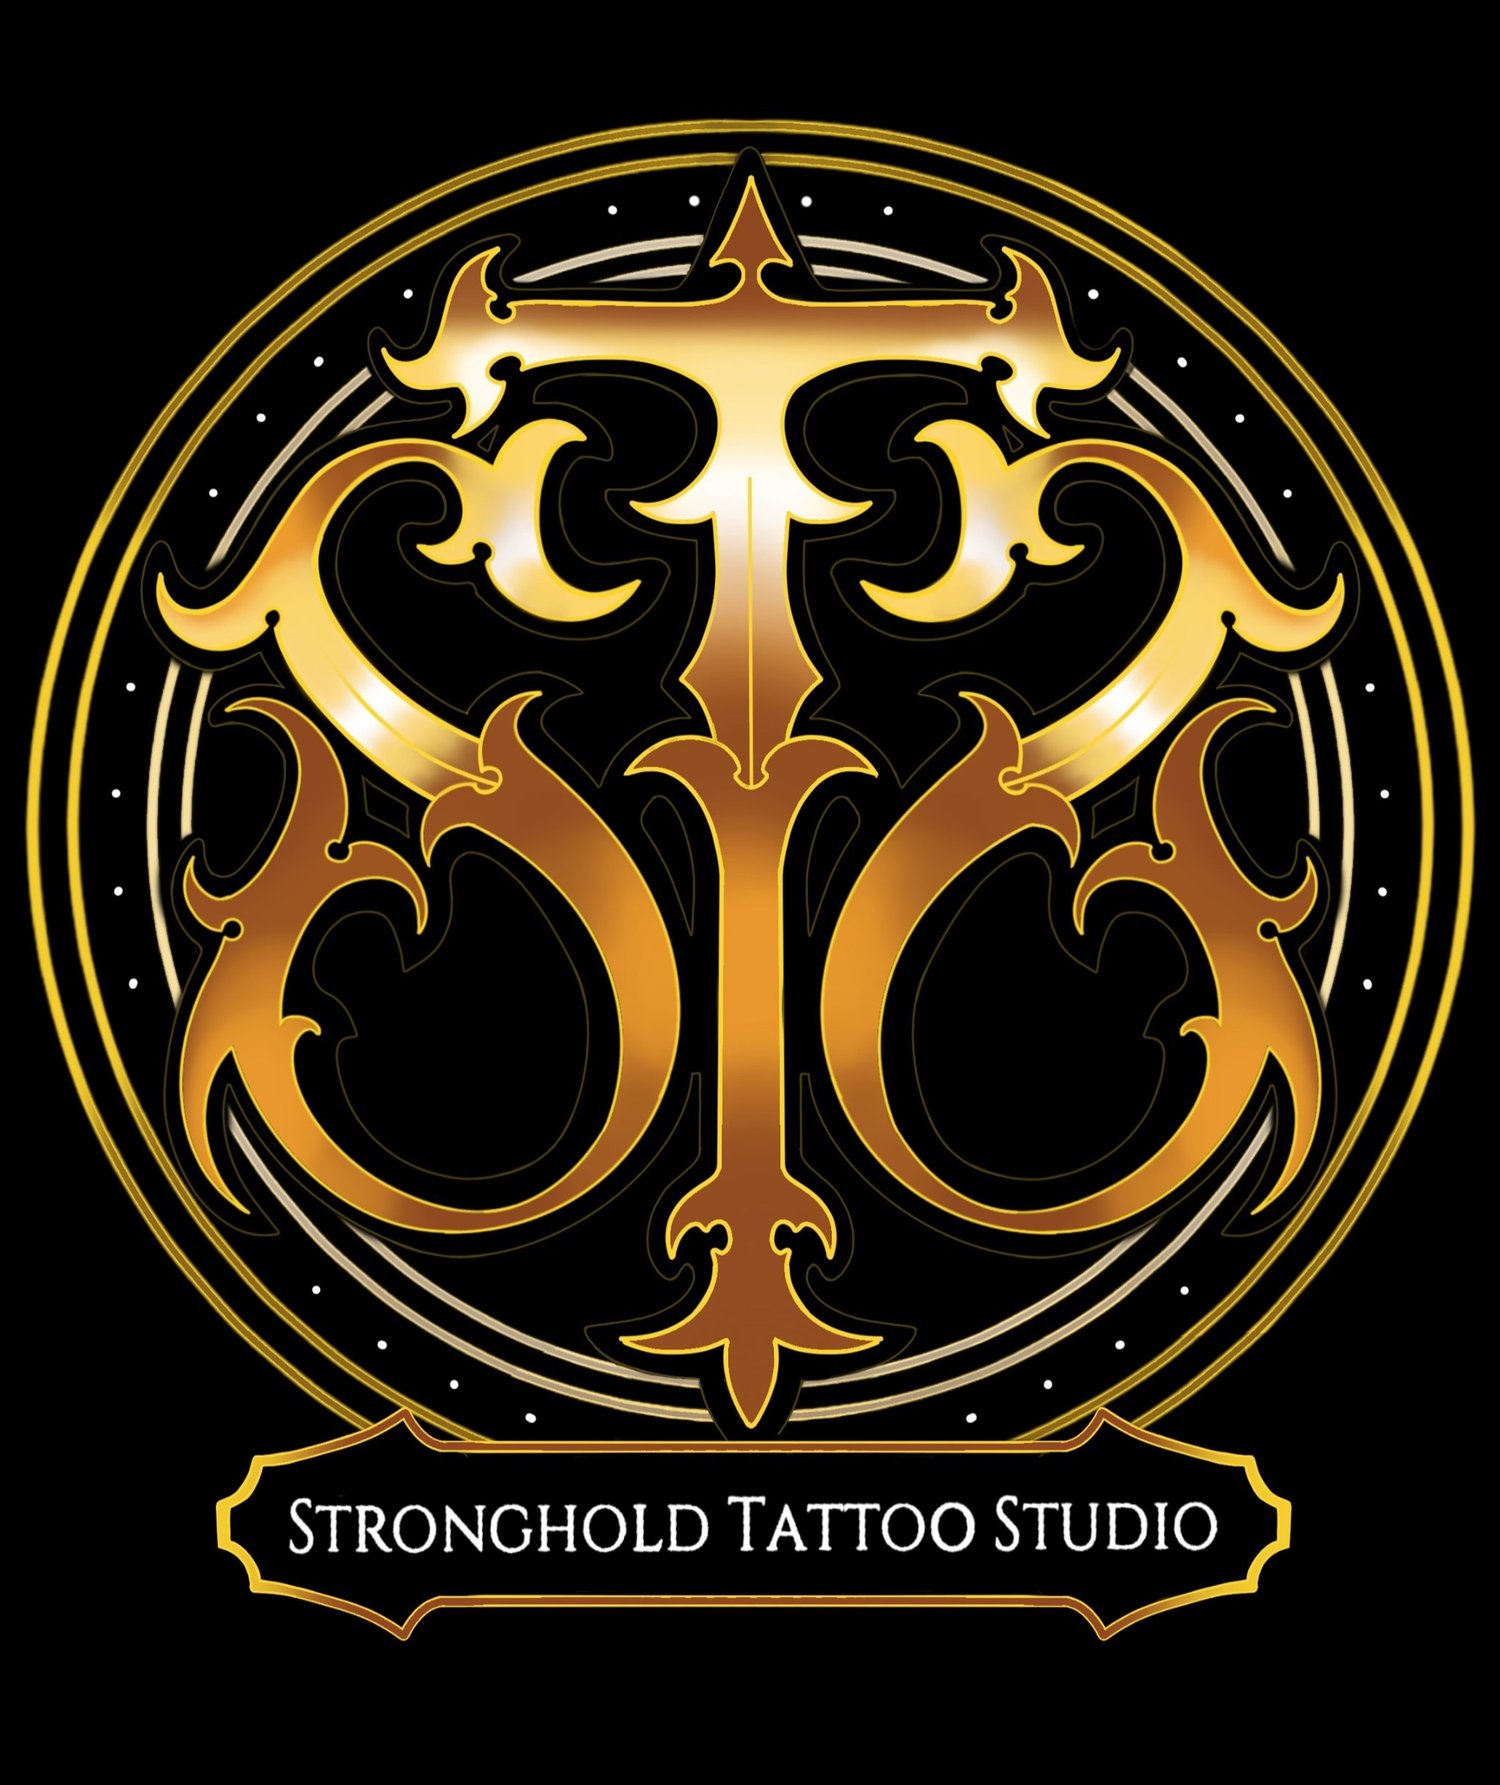 Stronghold Tattoo Studio